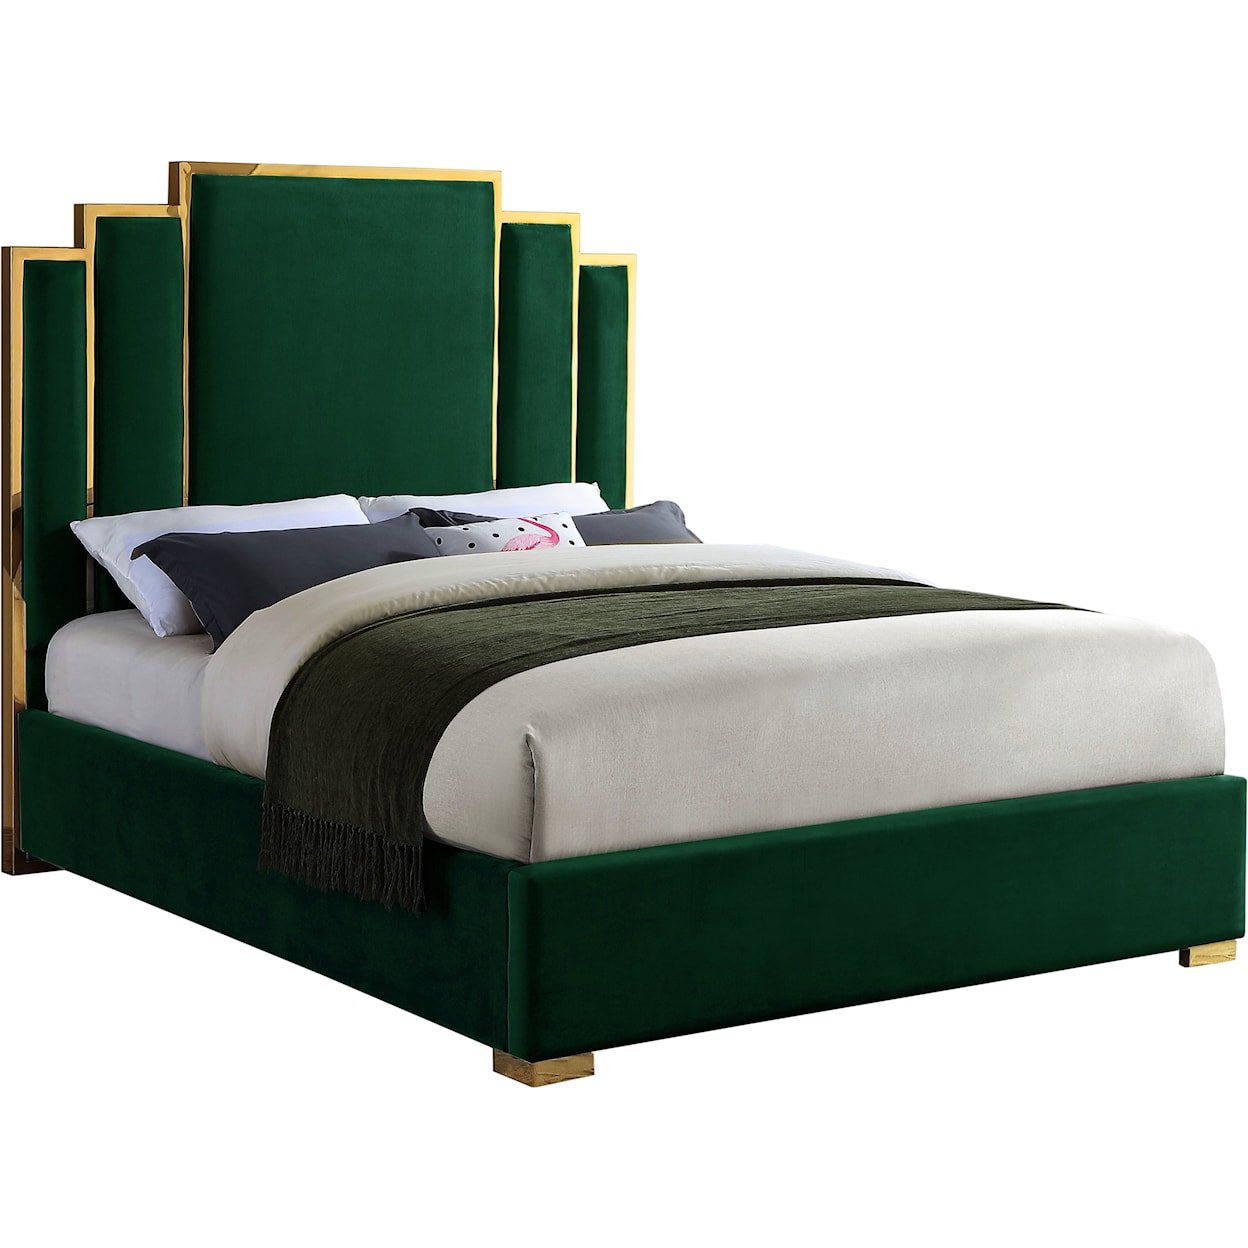 Meridian Furniture Hugo King Bed